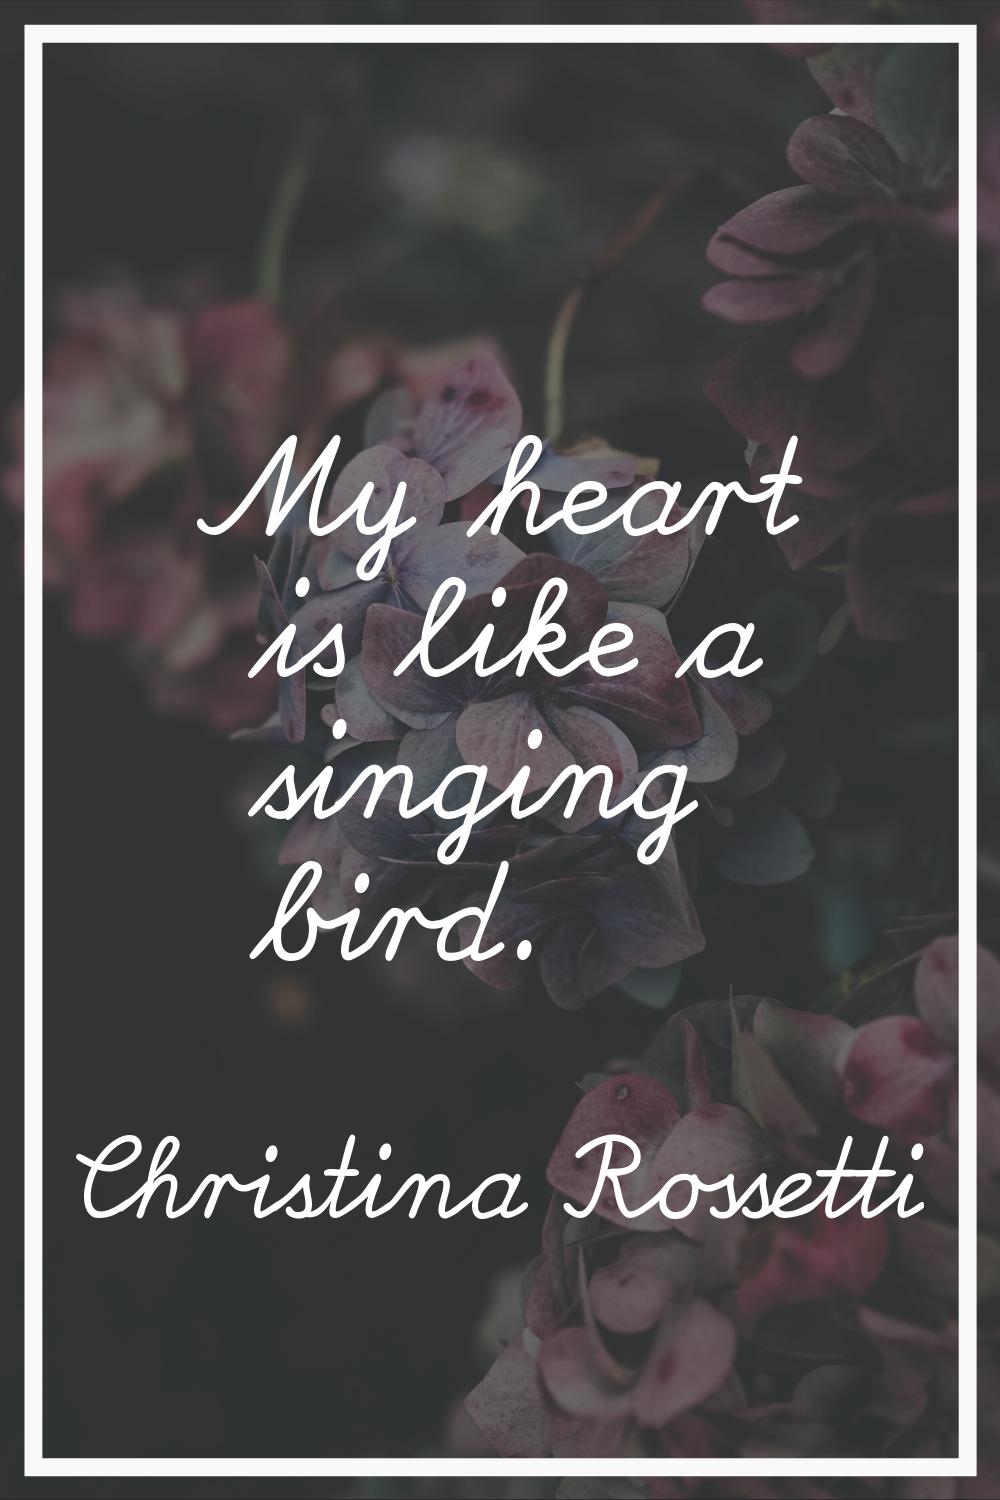 My heart is like a singing bird.